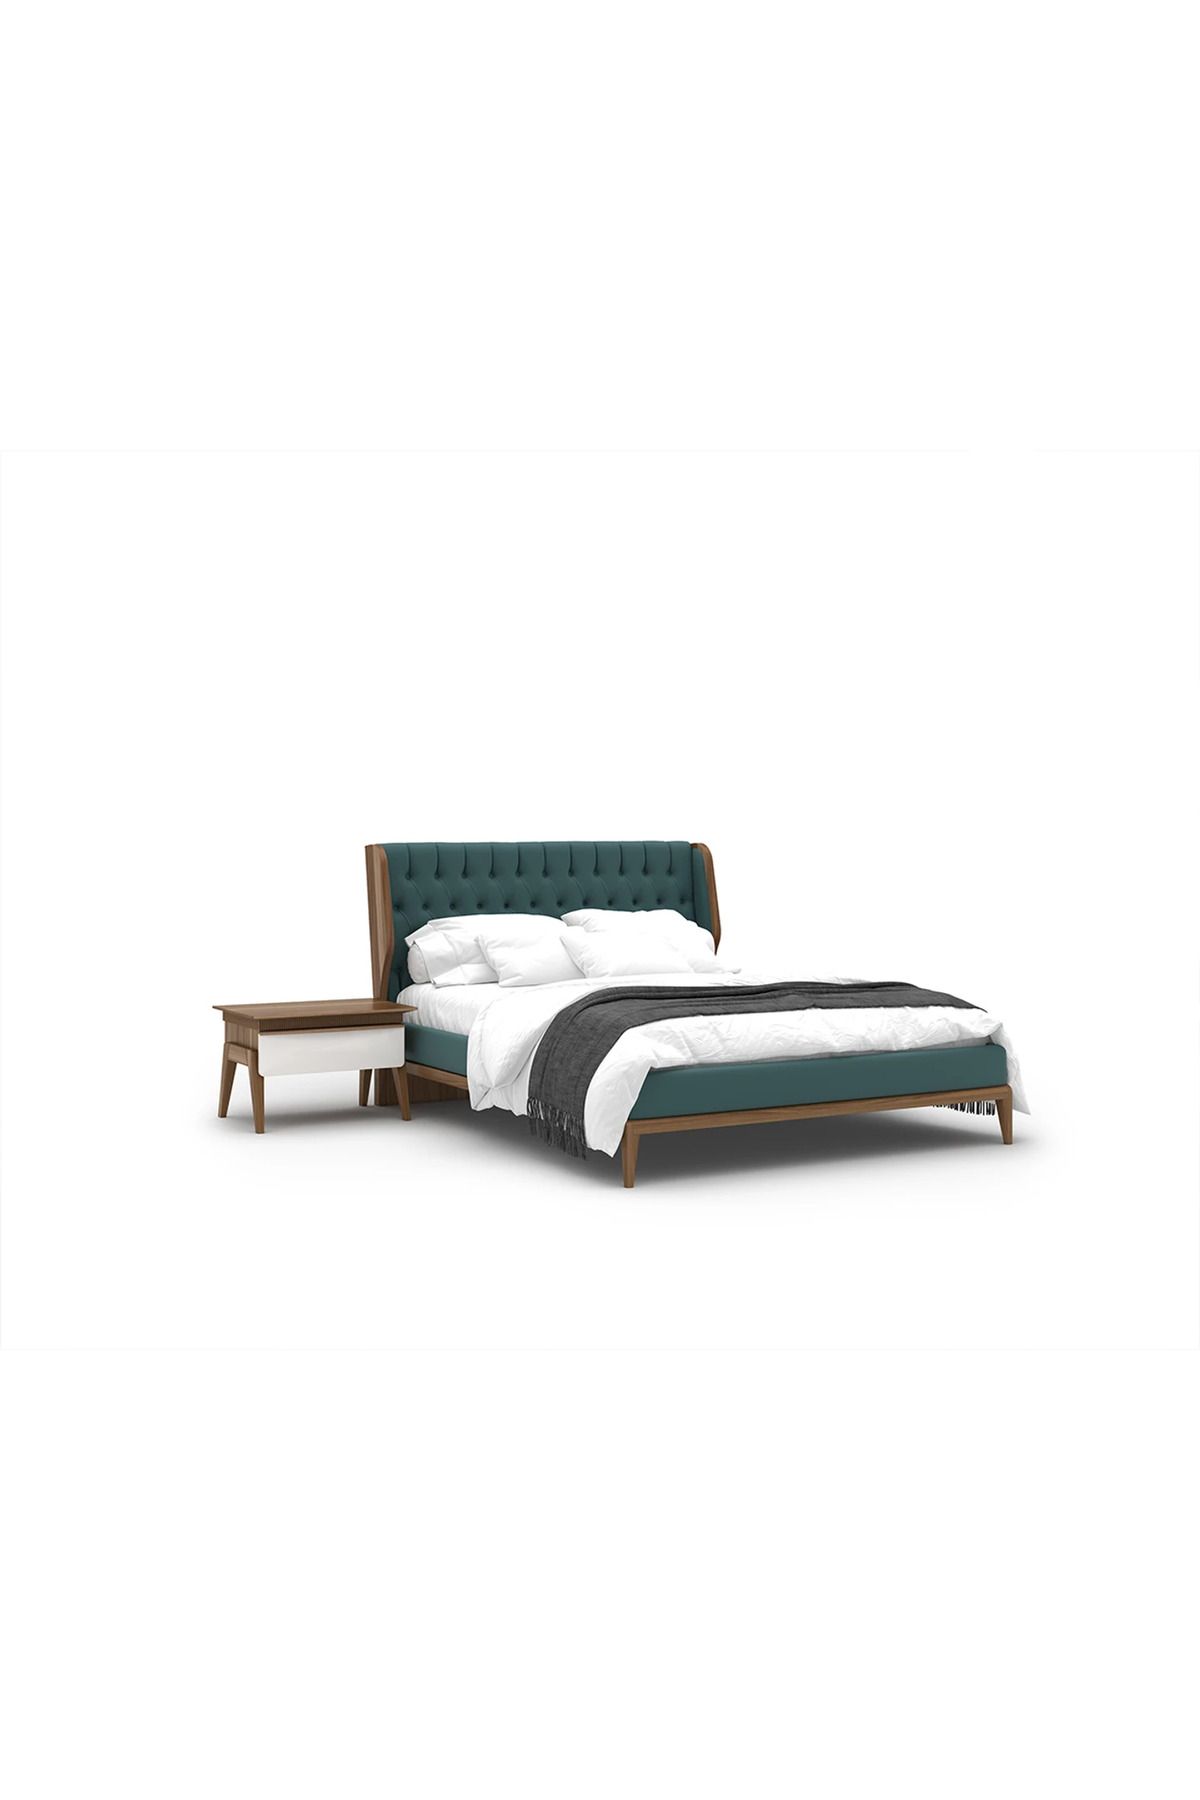 Nill's Furniture Design Lima Komodin